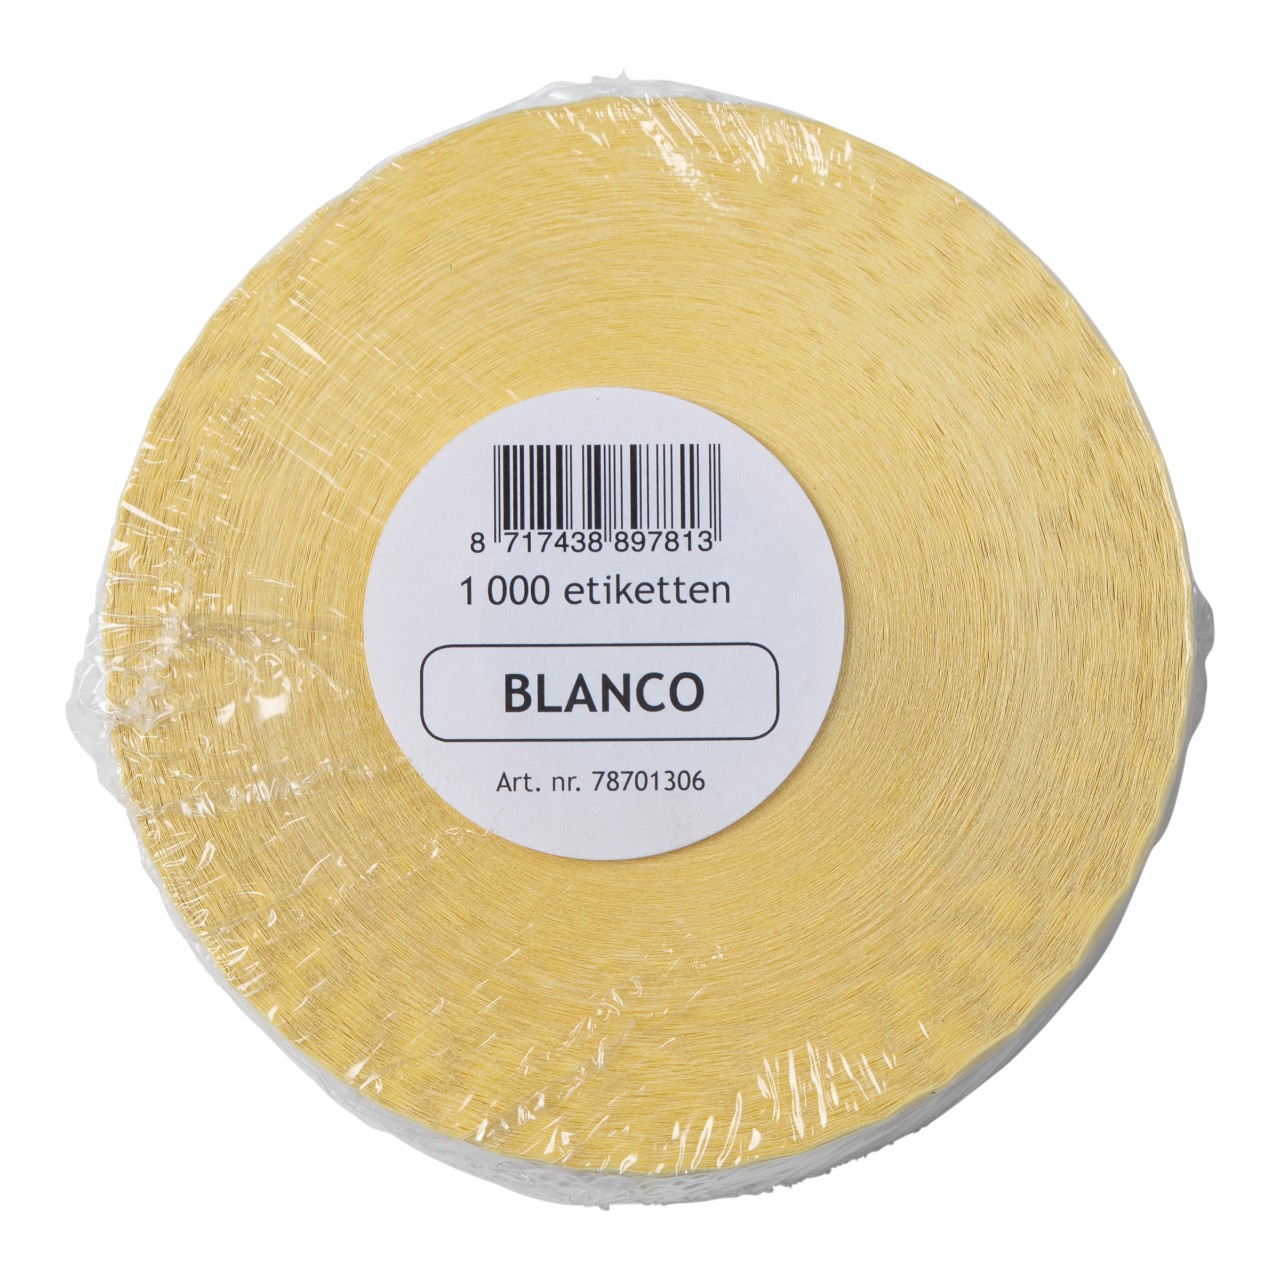 Blanco etiket removable 1000 stuks